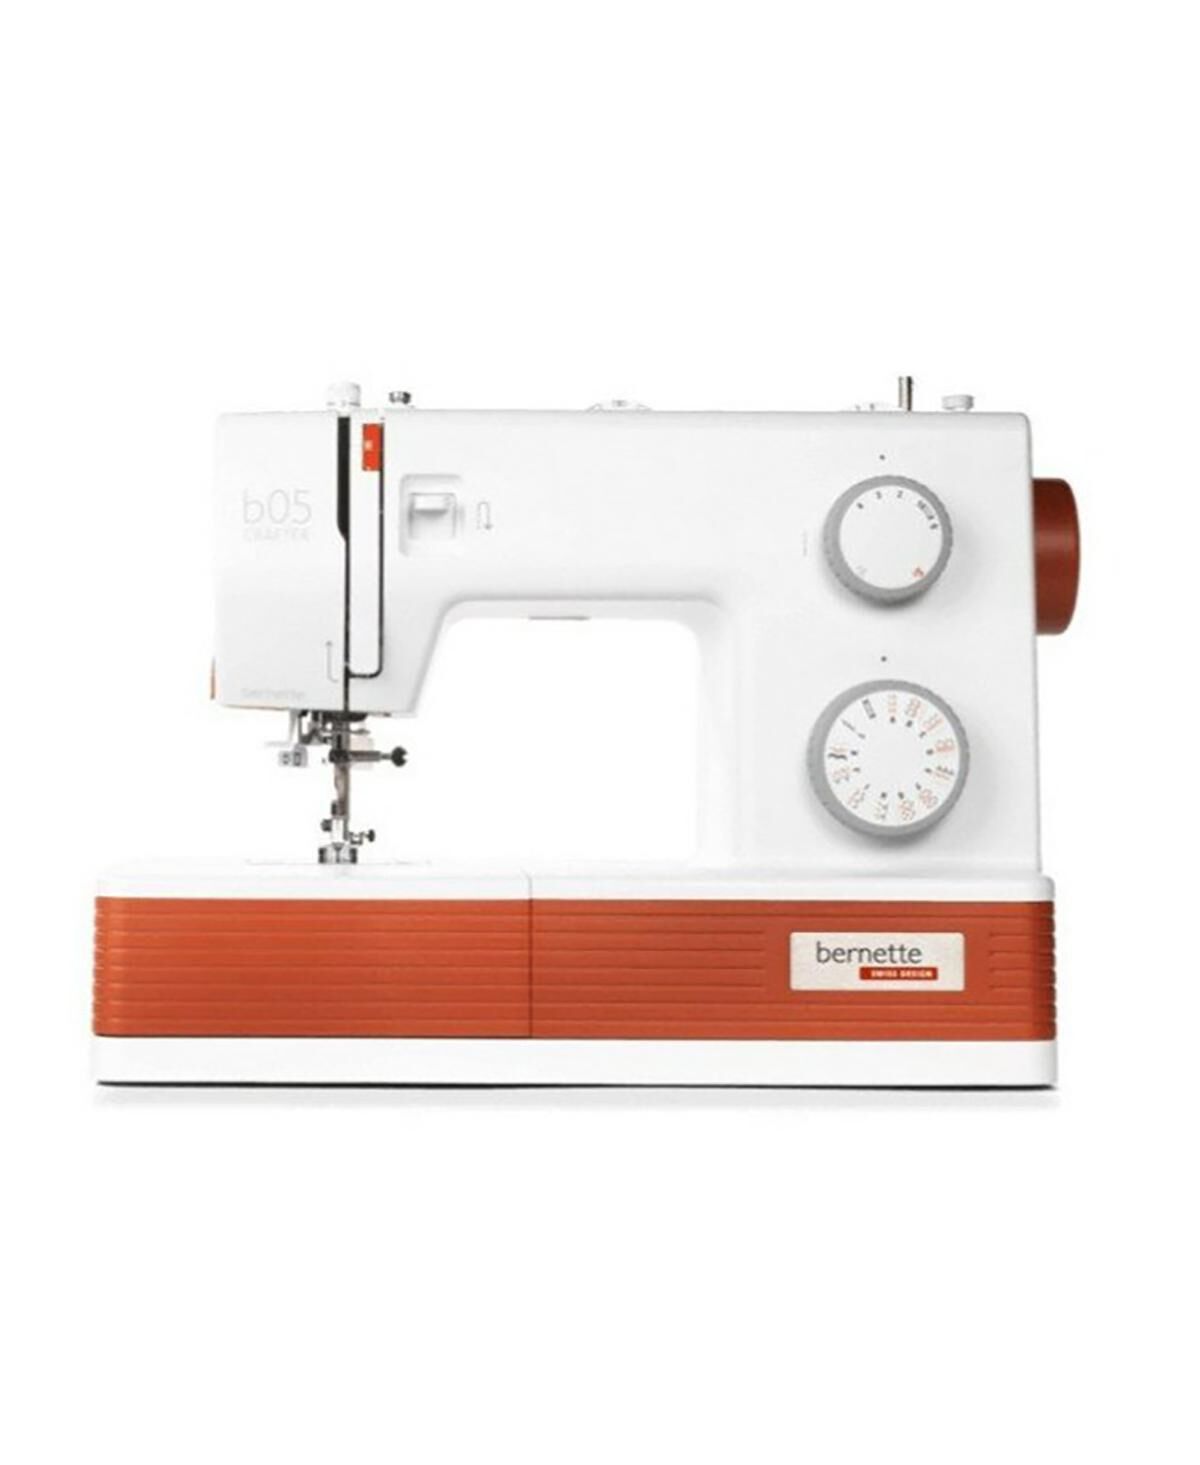 Bernette b05 Crafter Swiss Design Mechanical Sewing Machine - White